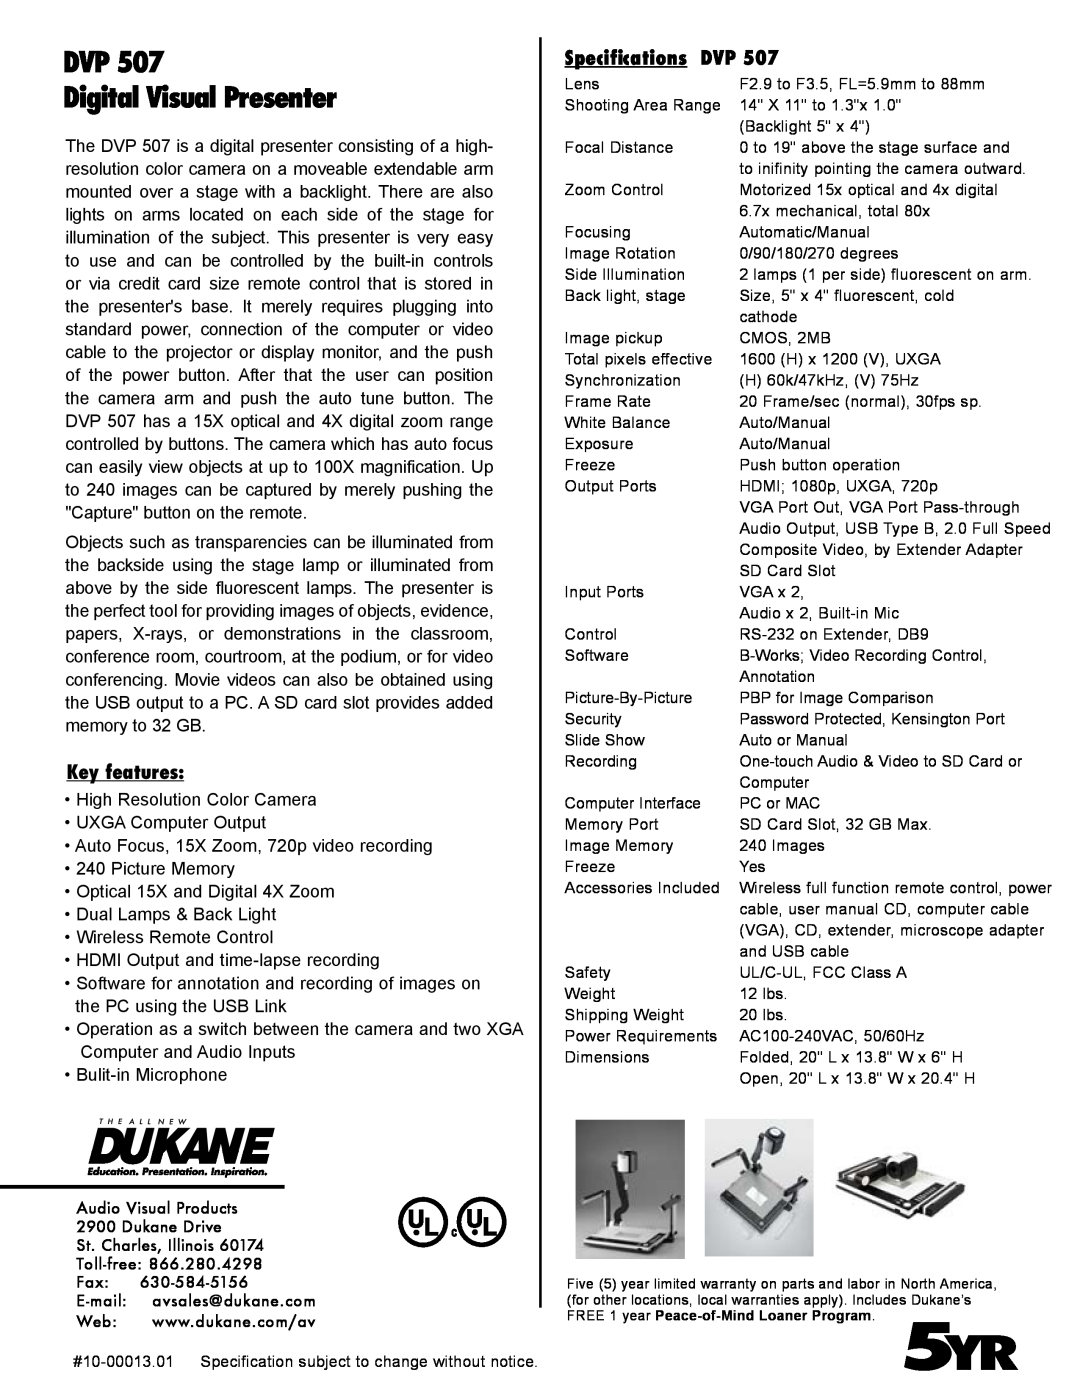 Dukane DVP507 manual DVP Digital Visual Presenter, Key features, Specifications DVP 